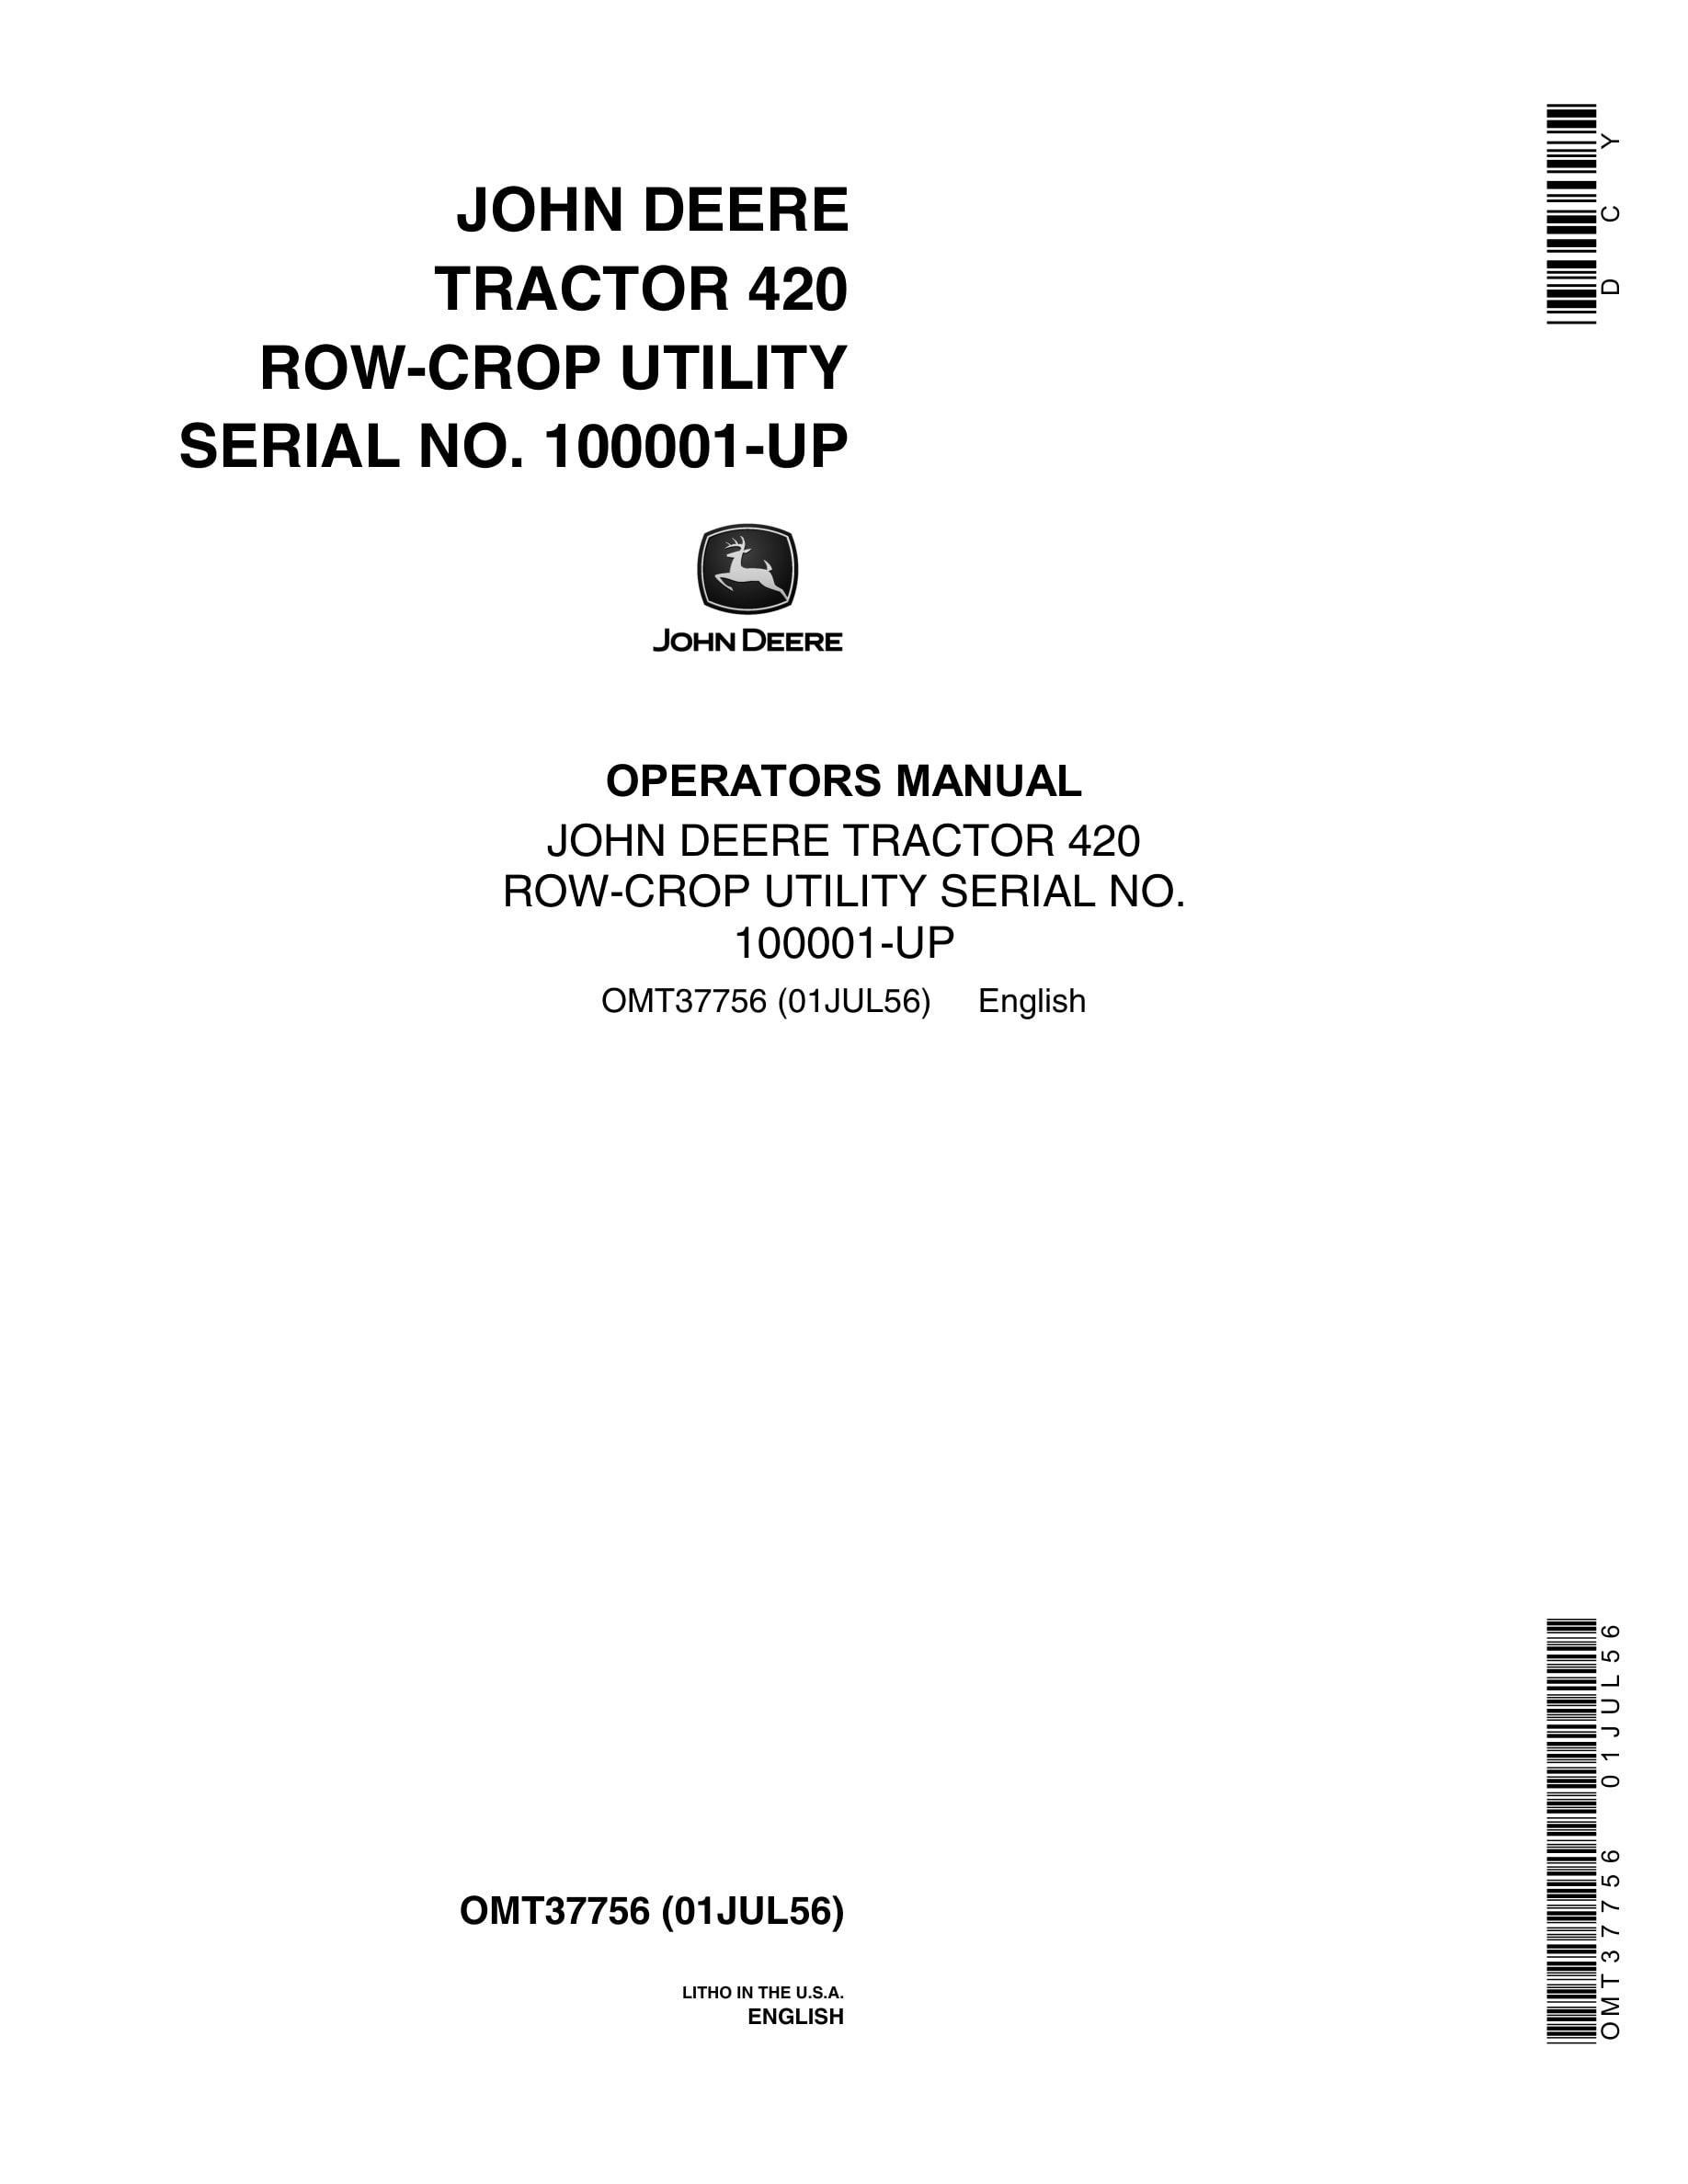 John Deere Row-crop Utility 420 Tractor Operator Manual OMT3775-1